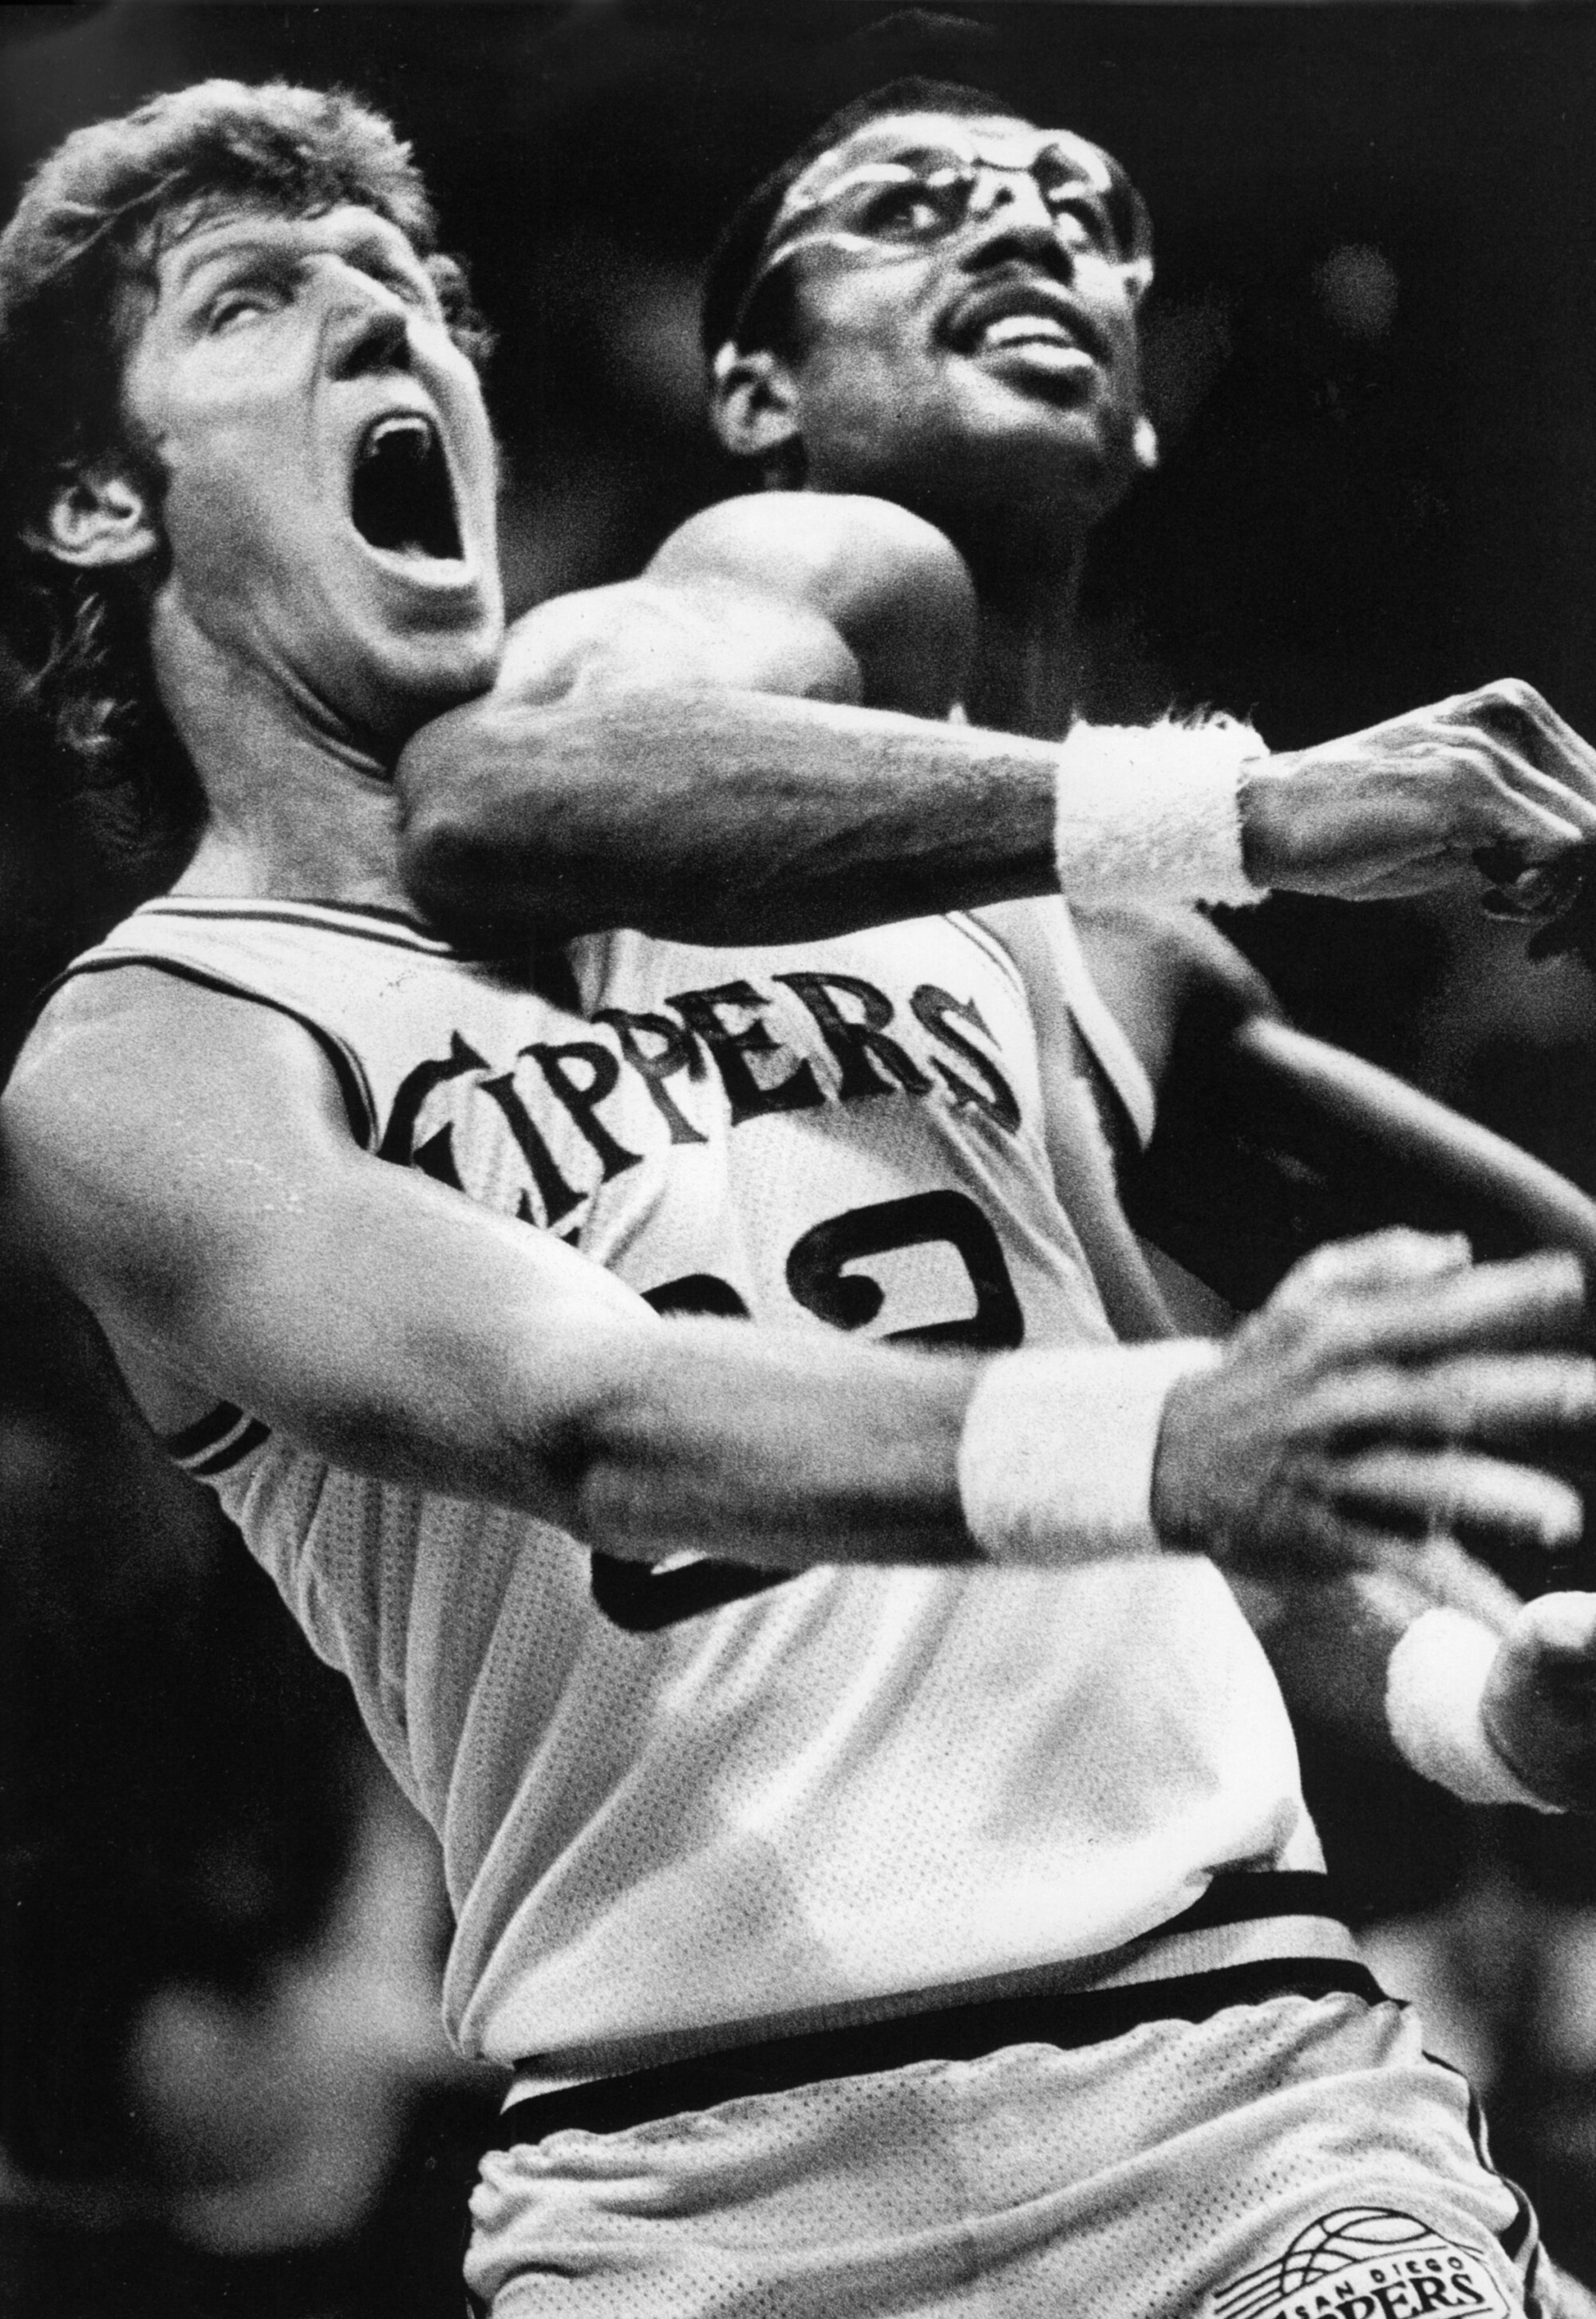 Bill Walton and Kareem Abdul-Jabbar mix it up under the basket in a 1983 NBA game